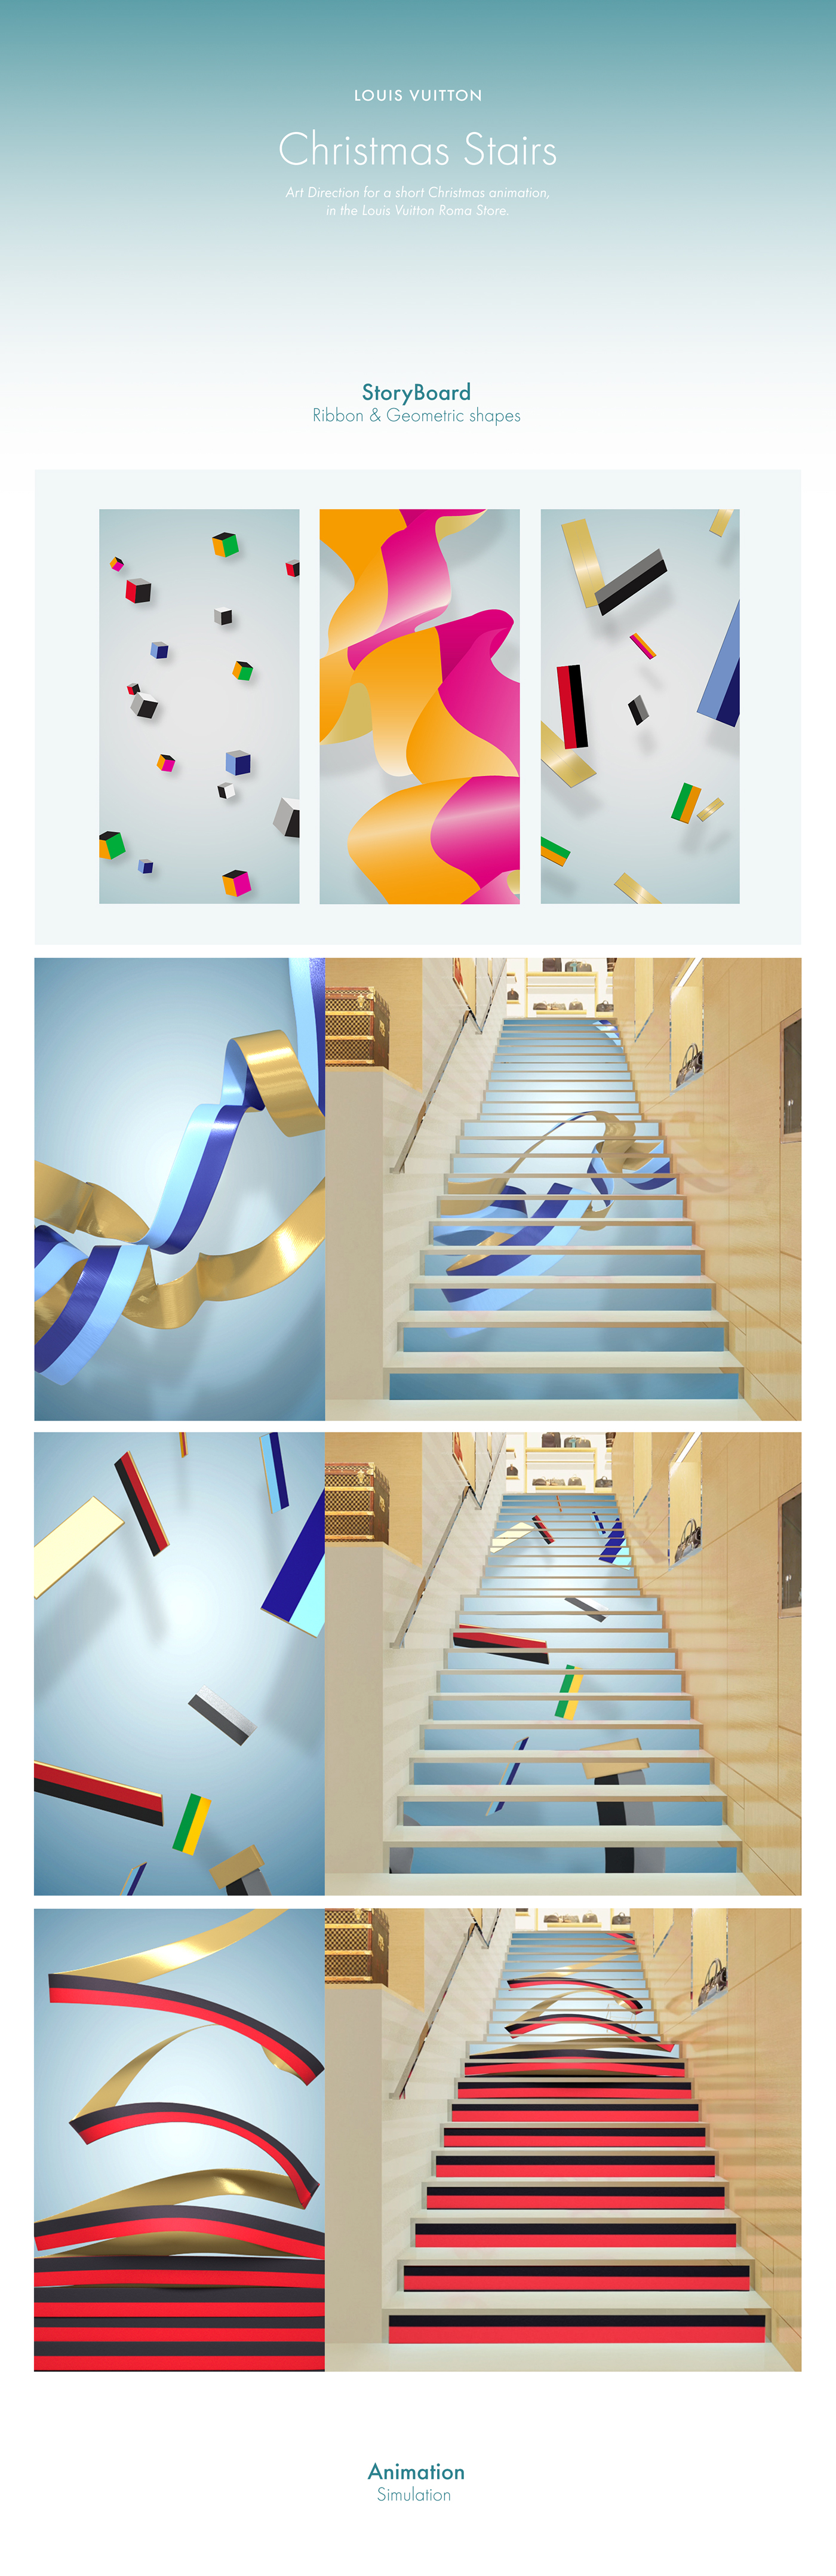 Louis vuitton Christmas stairs noel escaliers 3D